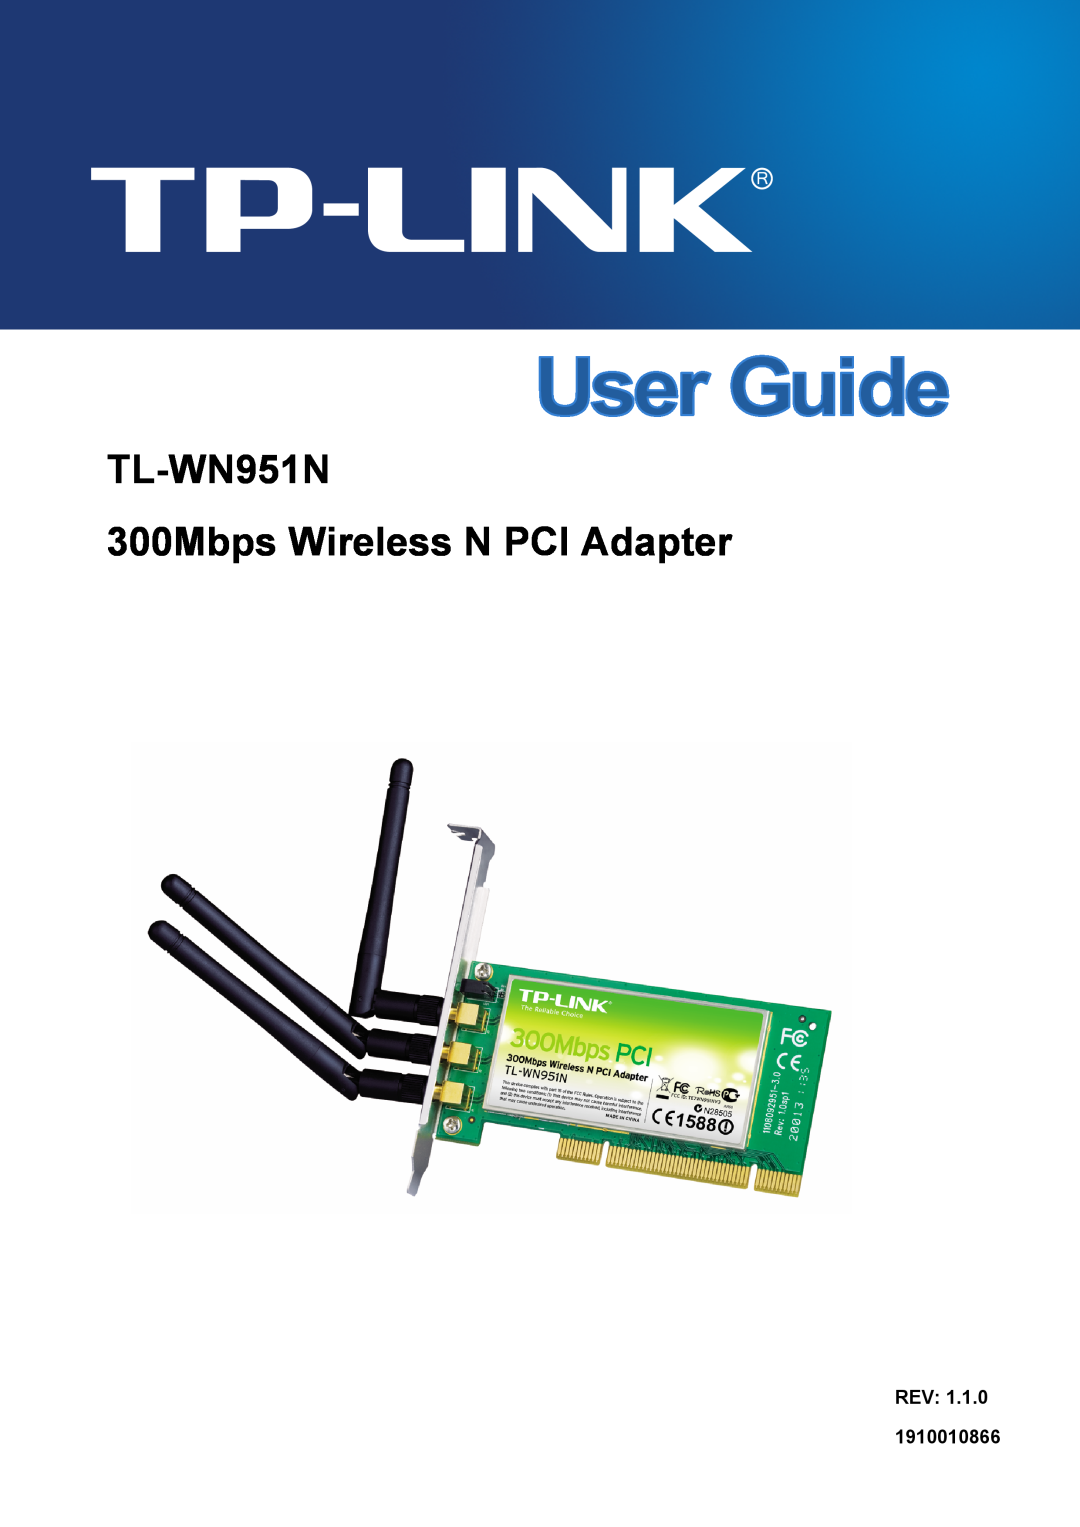 TP-Link manual TL-WN951N 300Mbps Wireless N PCI Adapter, REV 1910010866 